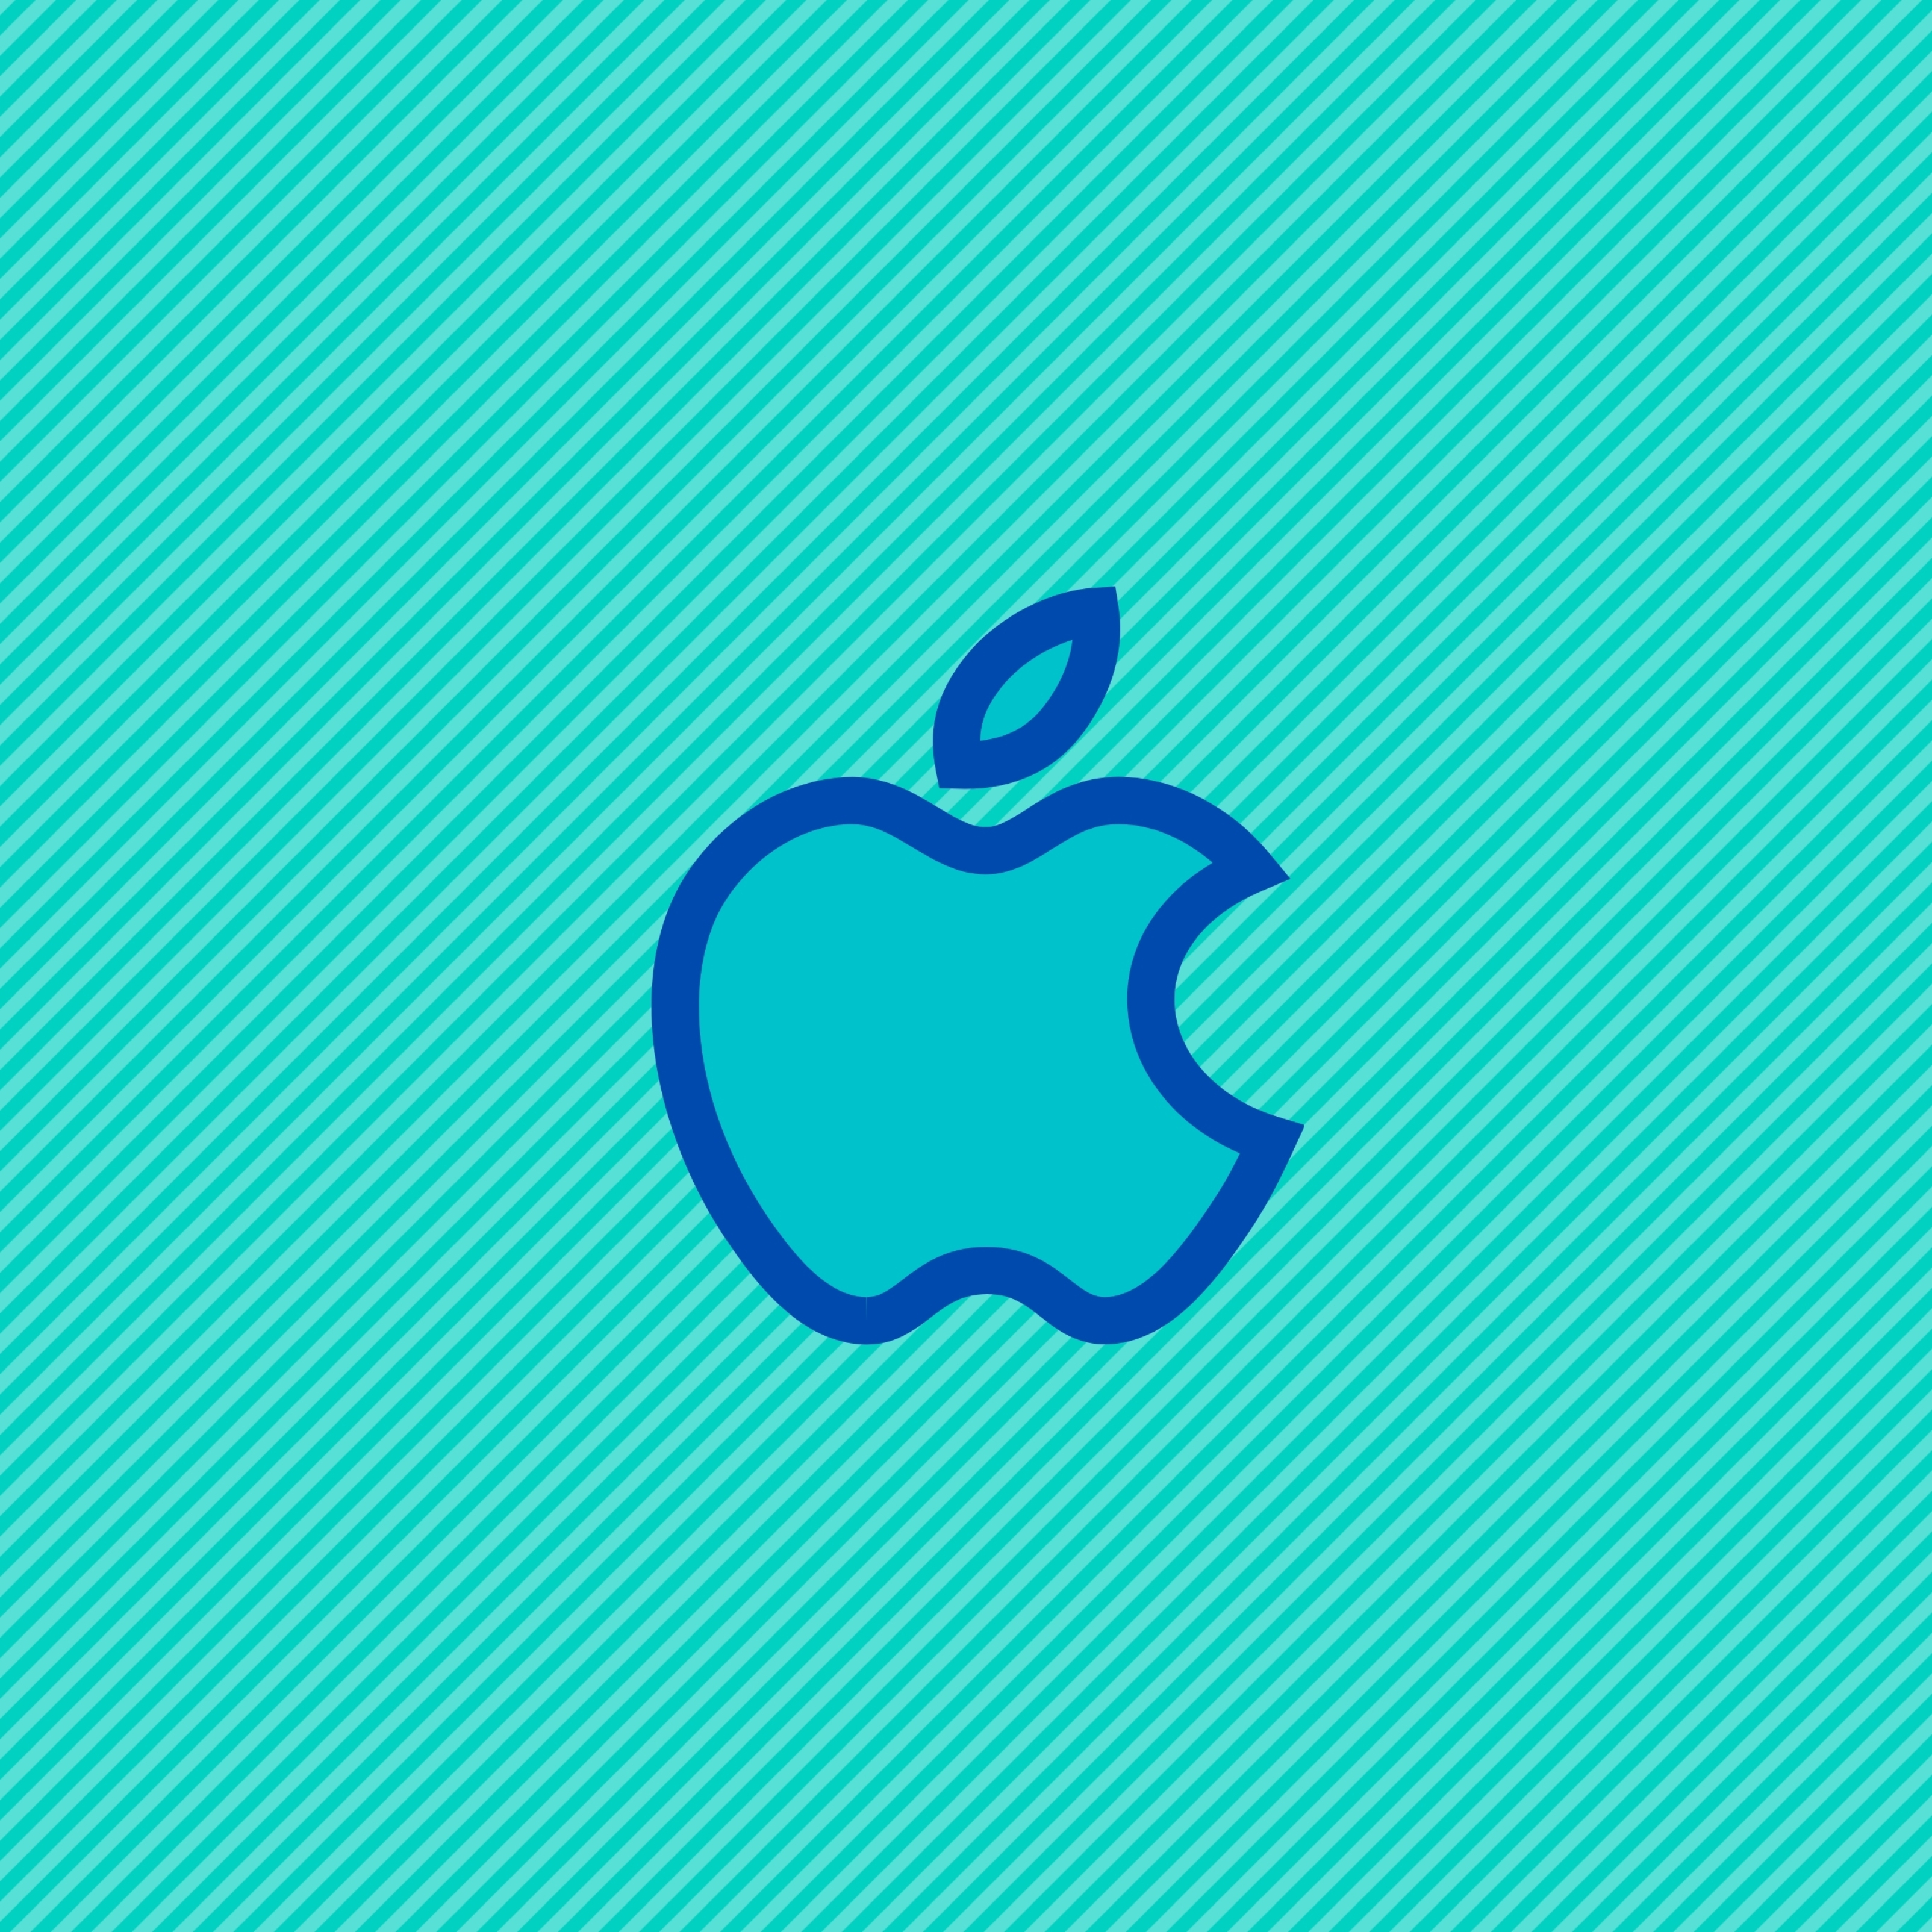 Apple Logo Blue Stripes Background iPad Wallpaper